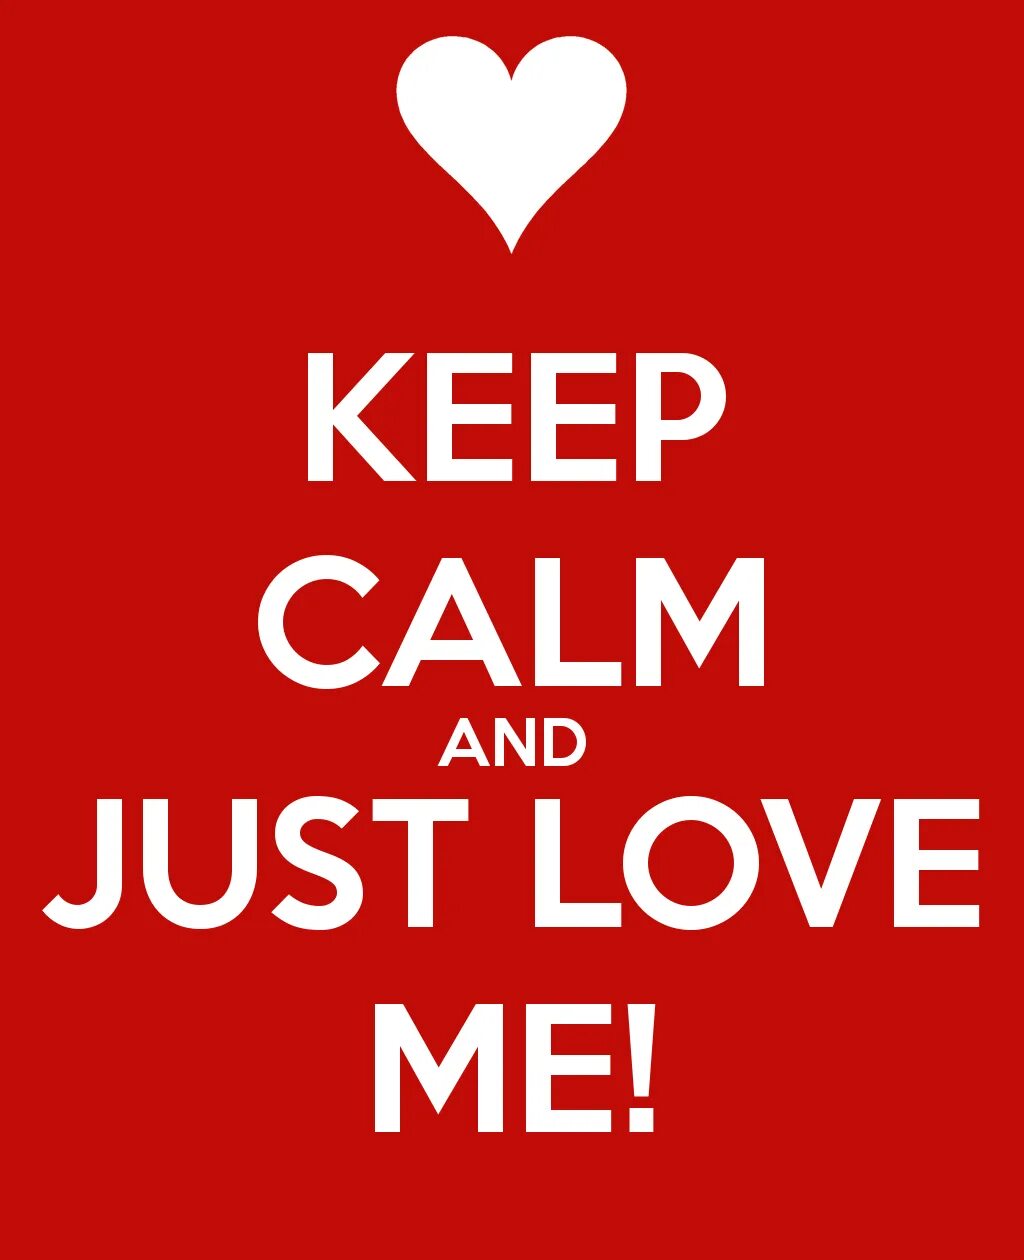 Just Love me. I Love me. Calm Love. E+M Love. You can just love me